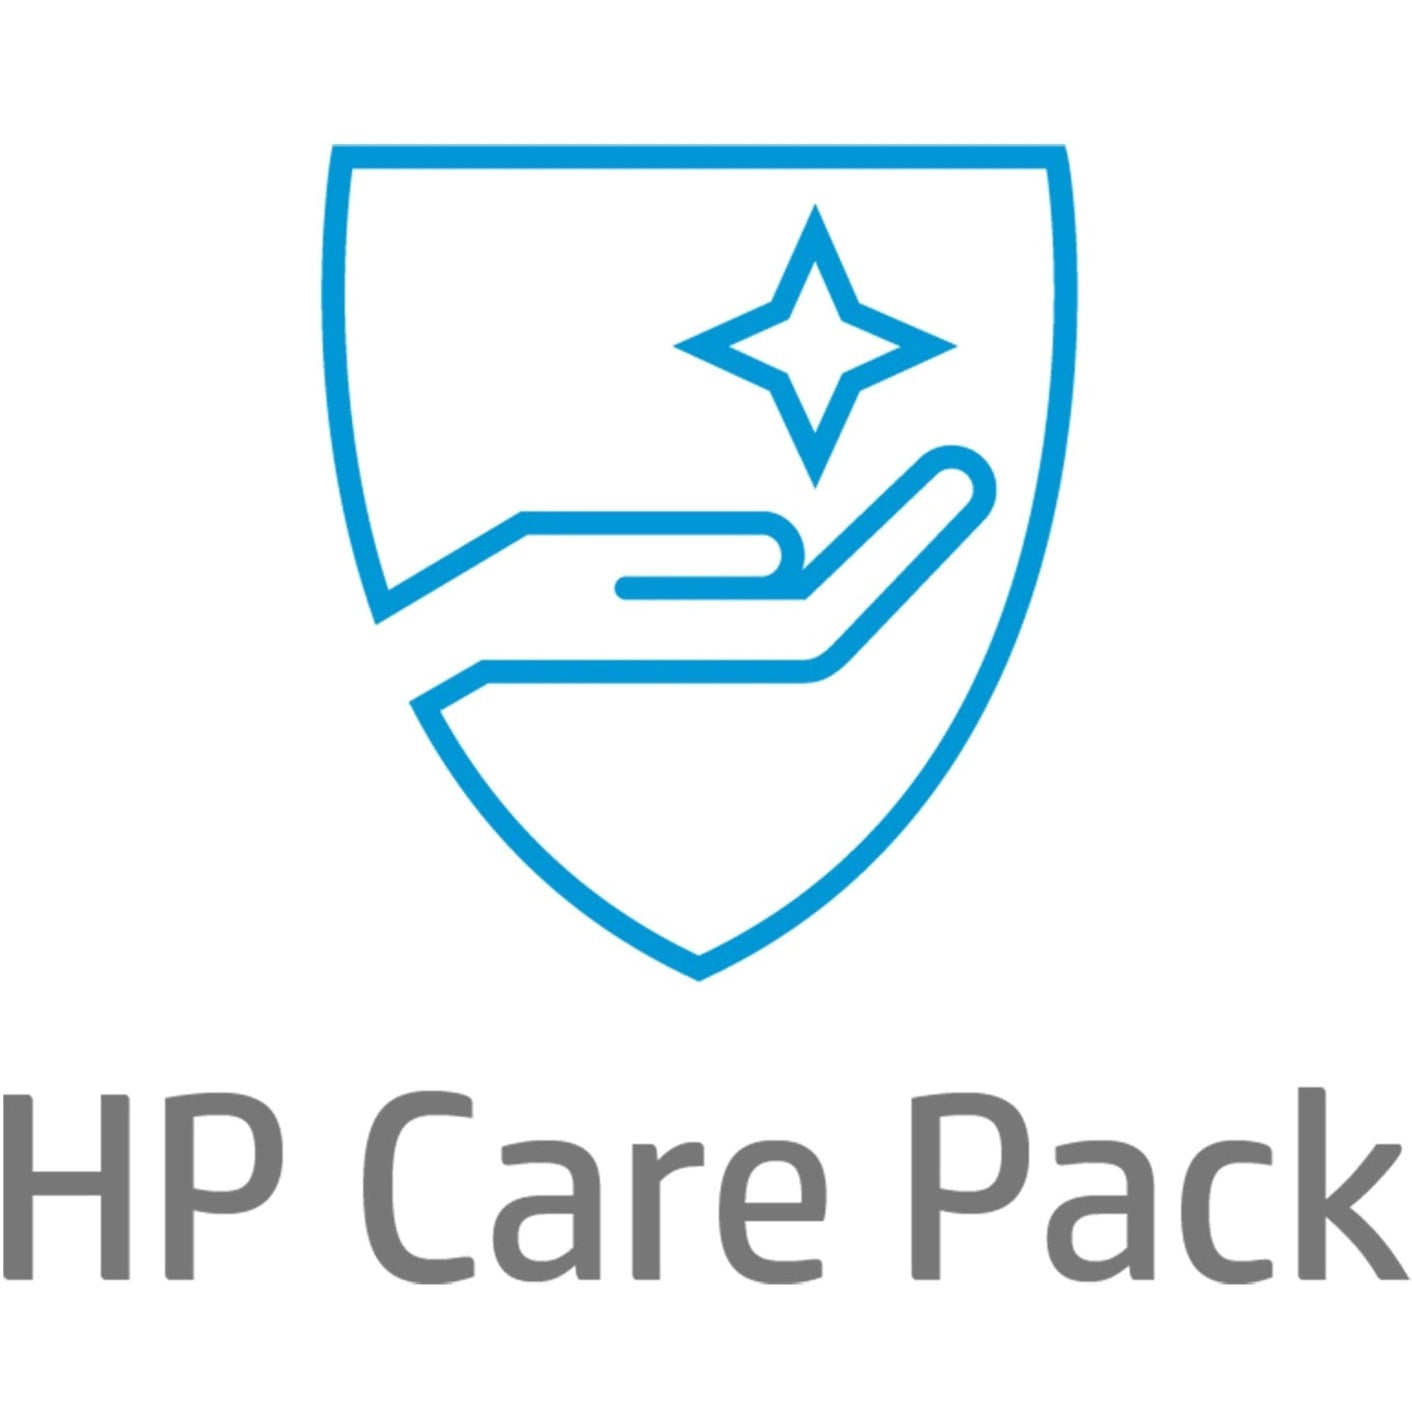 HP Care Pack - 4 Year - Warranty (U9EE5E)